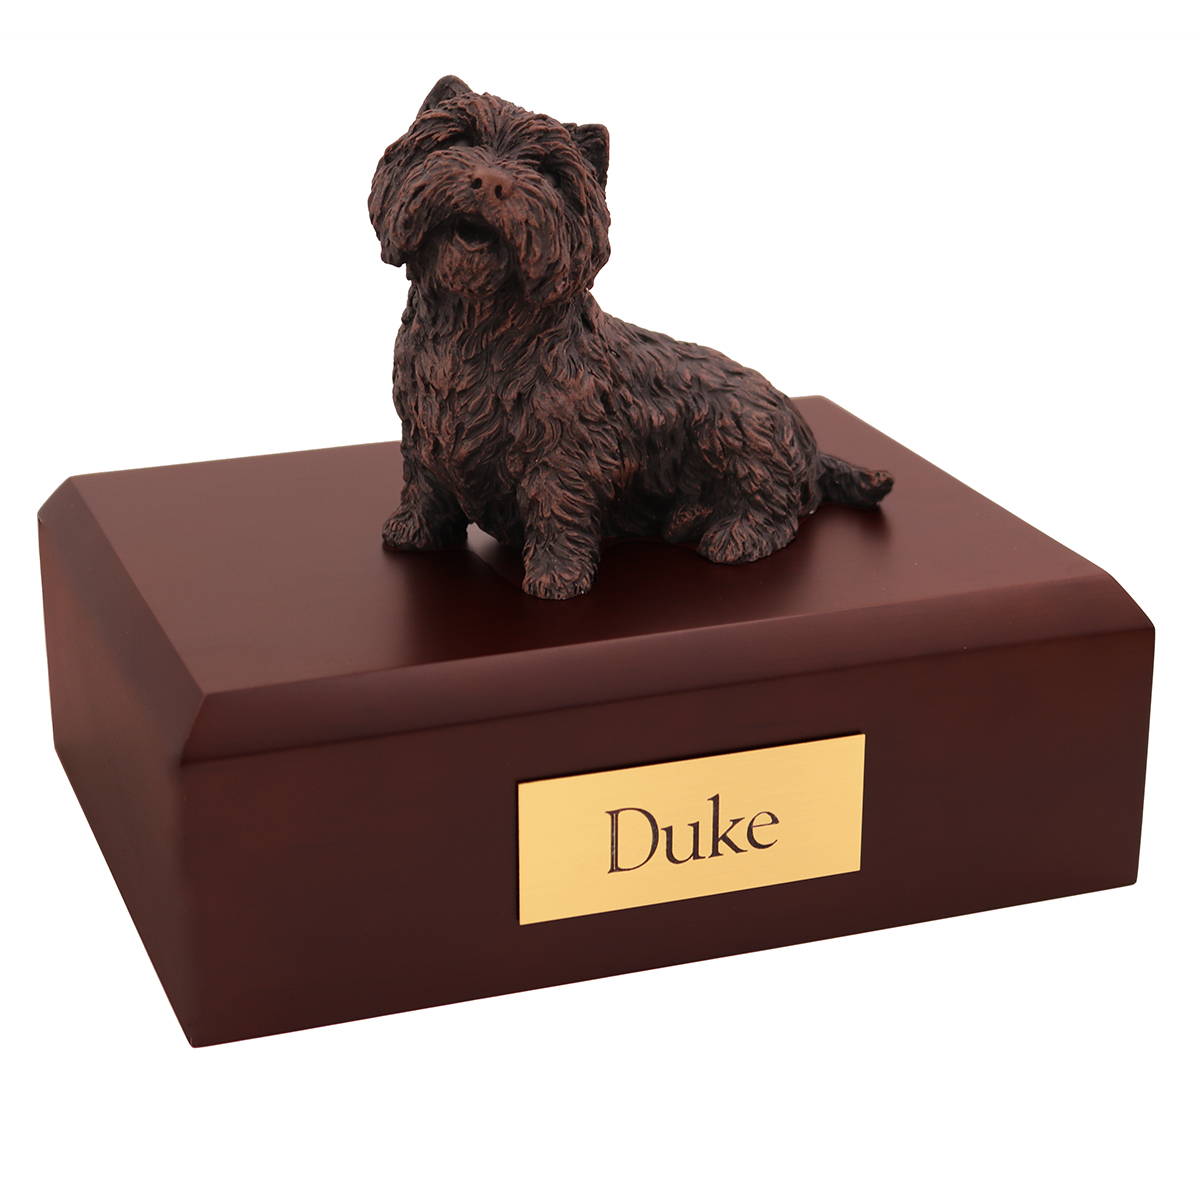 Dog, Westie, Bronze - Figurine Urn